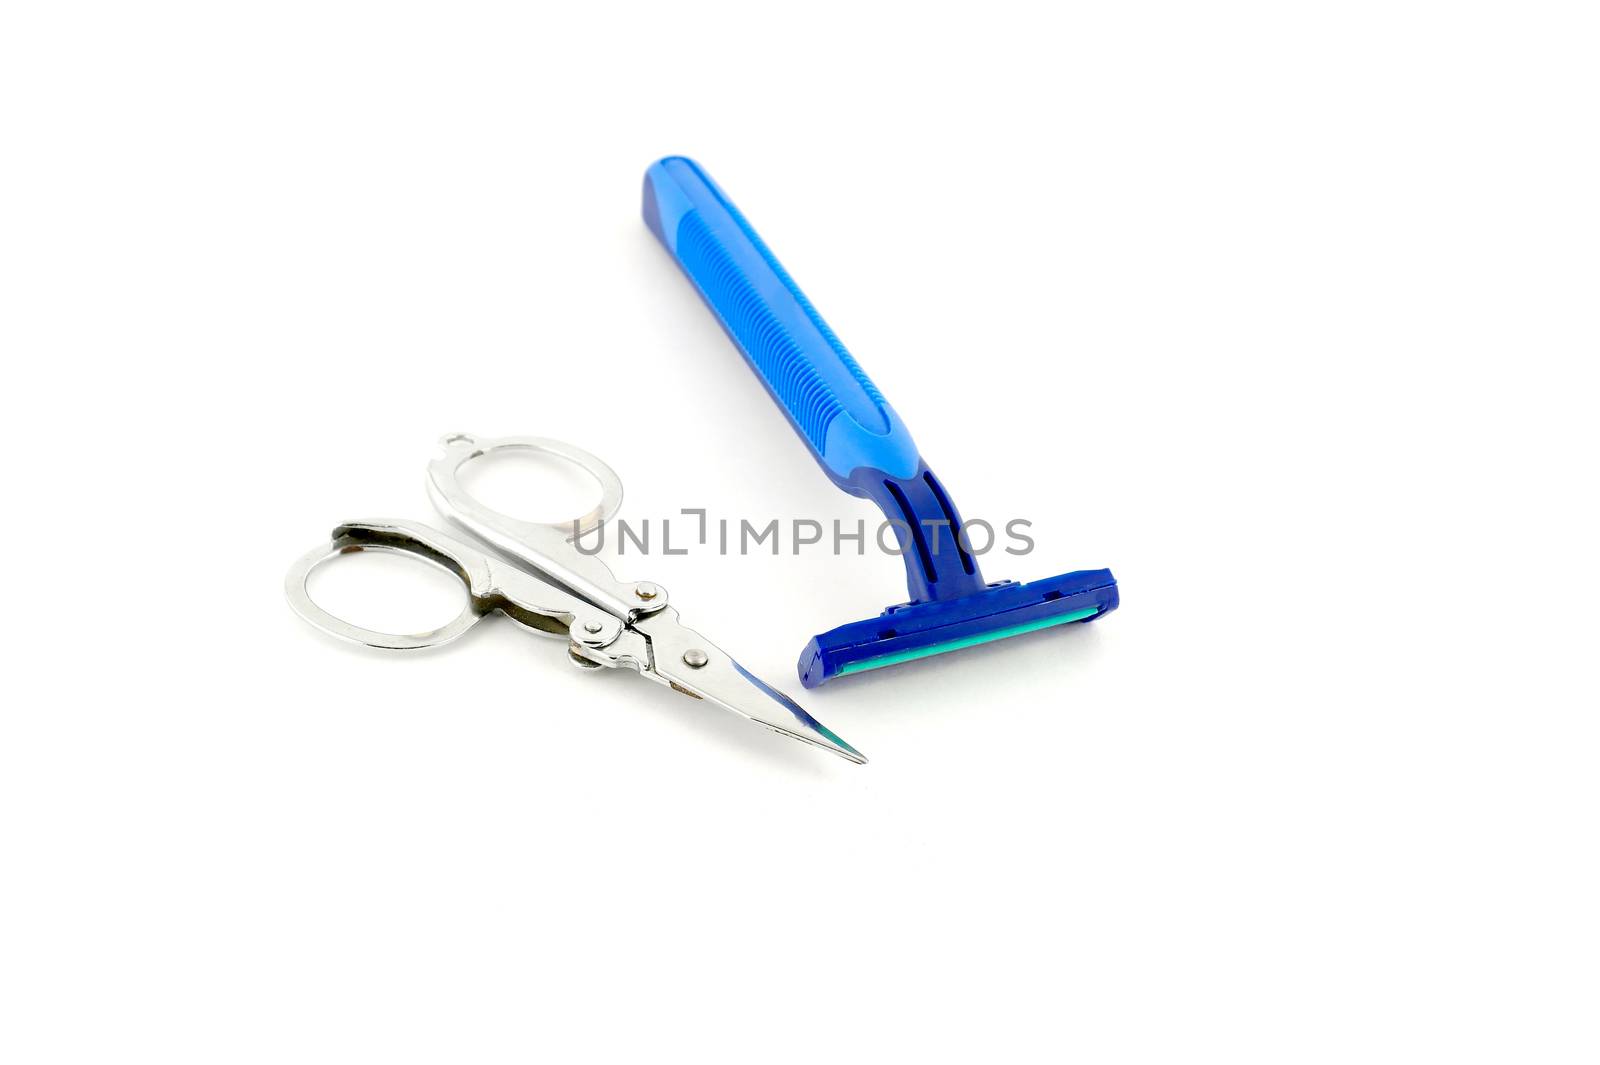 Shaving-set and nail scissors over white